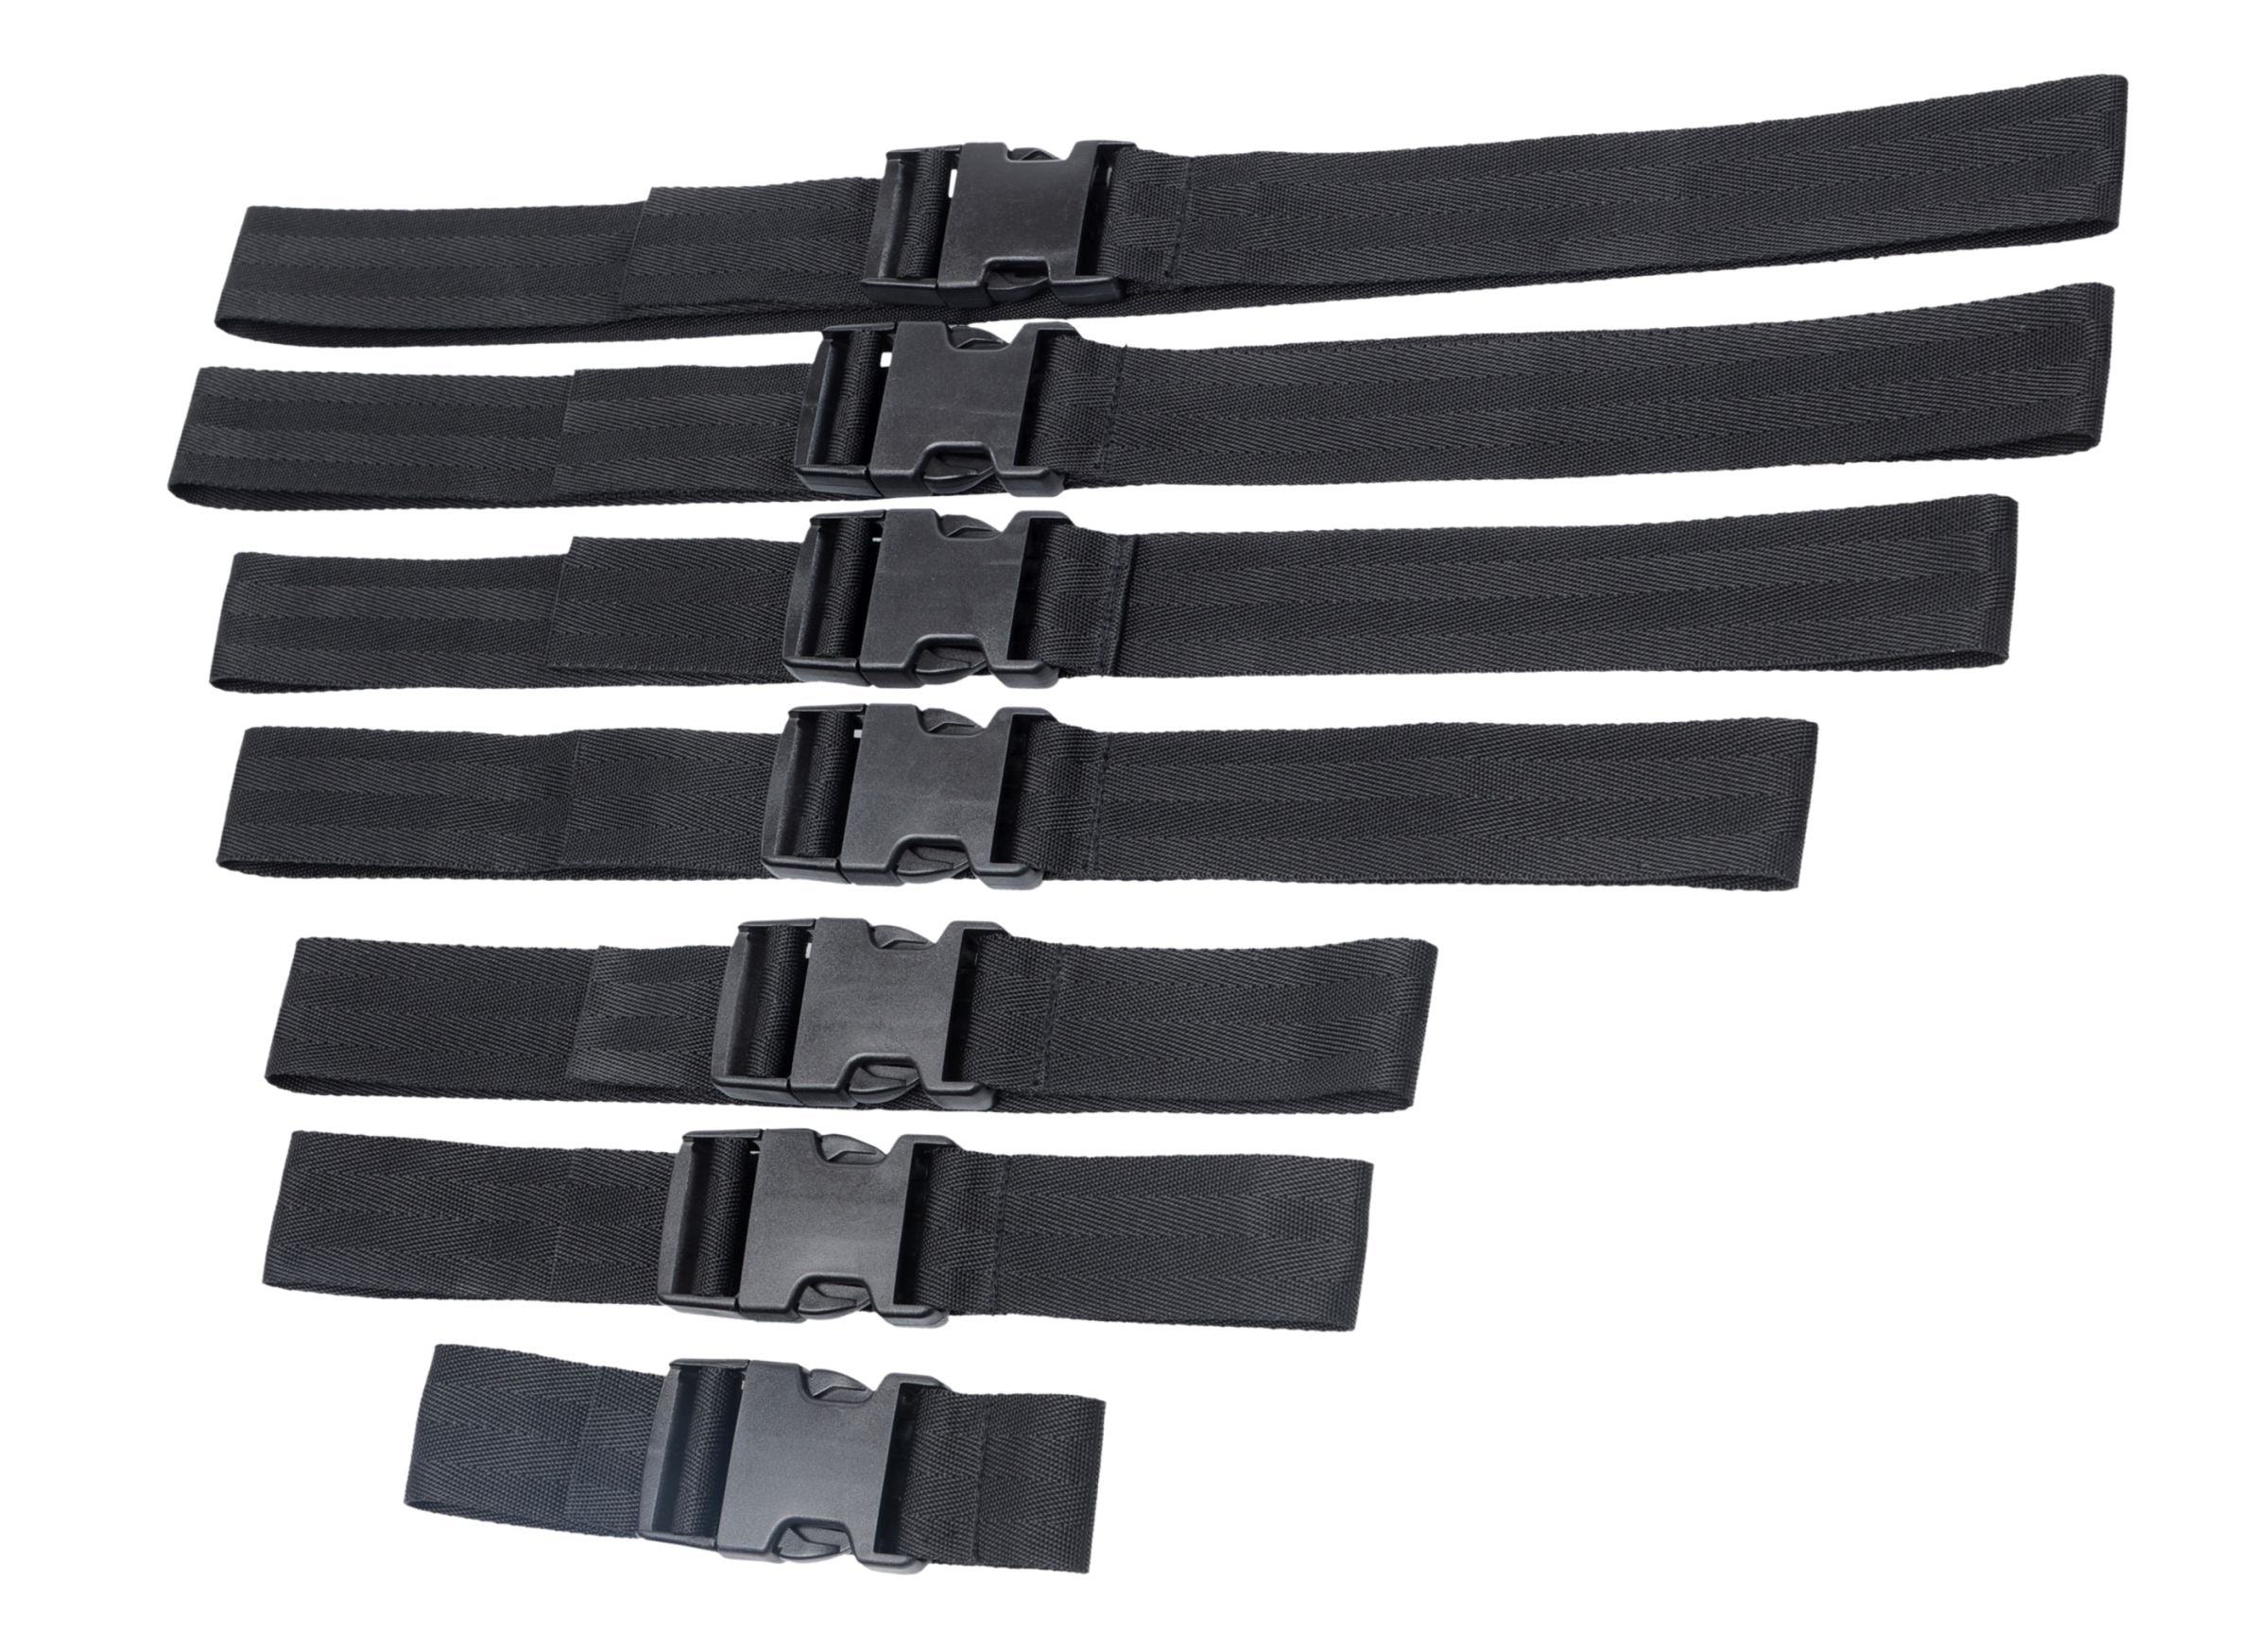 Ultimate Bondage Restraints: Seven Adjustable Nylon Straps for Immersive Play